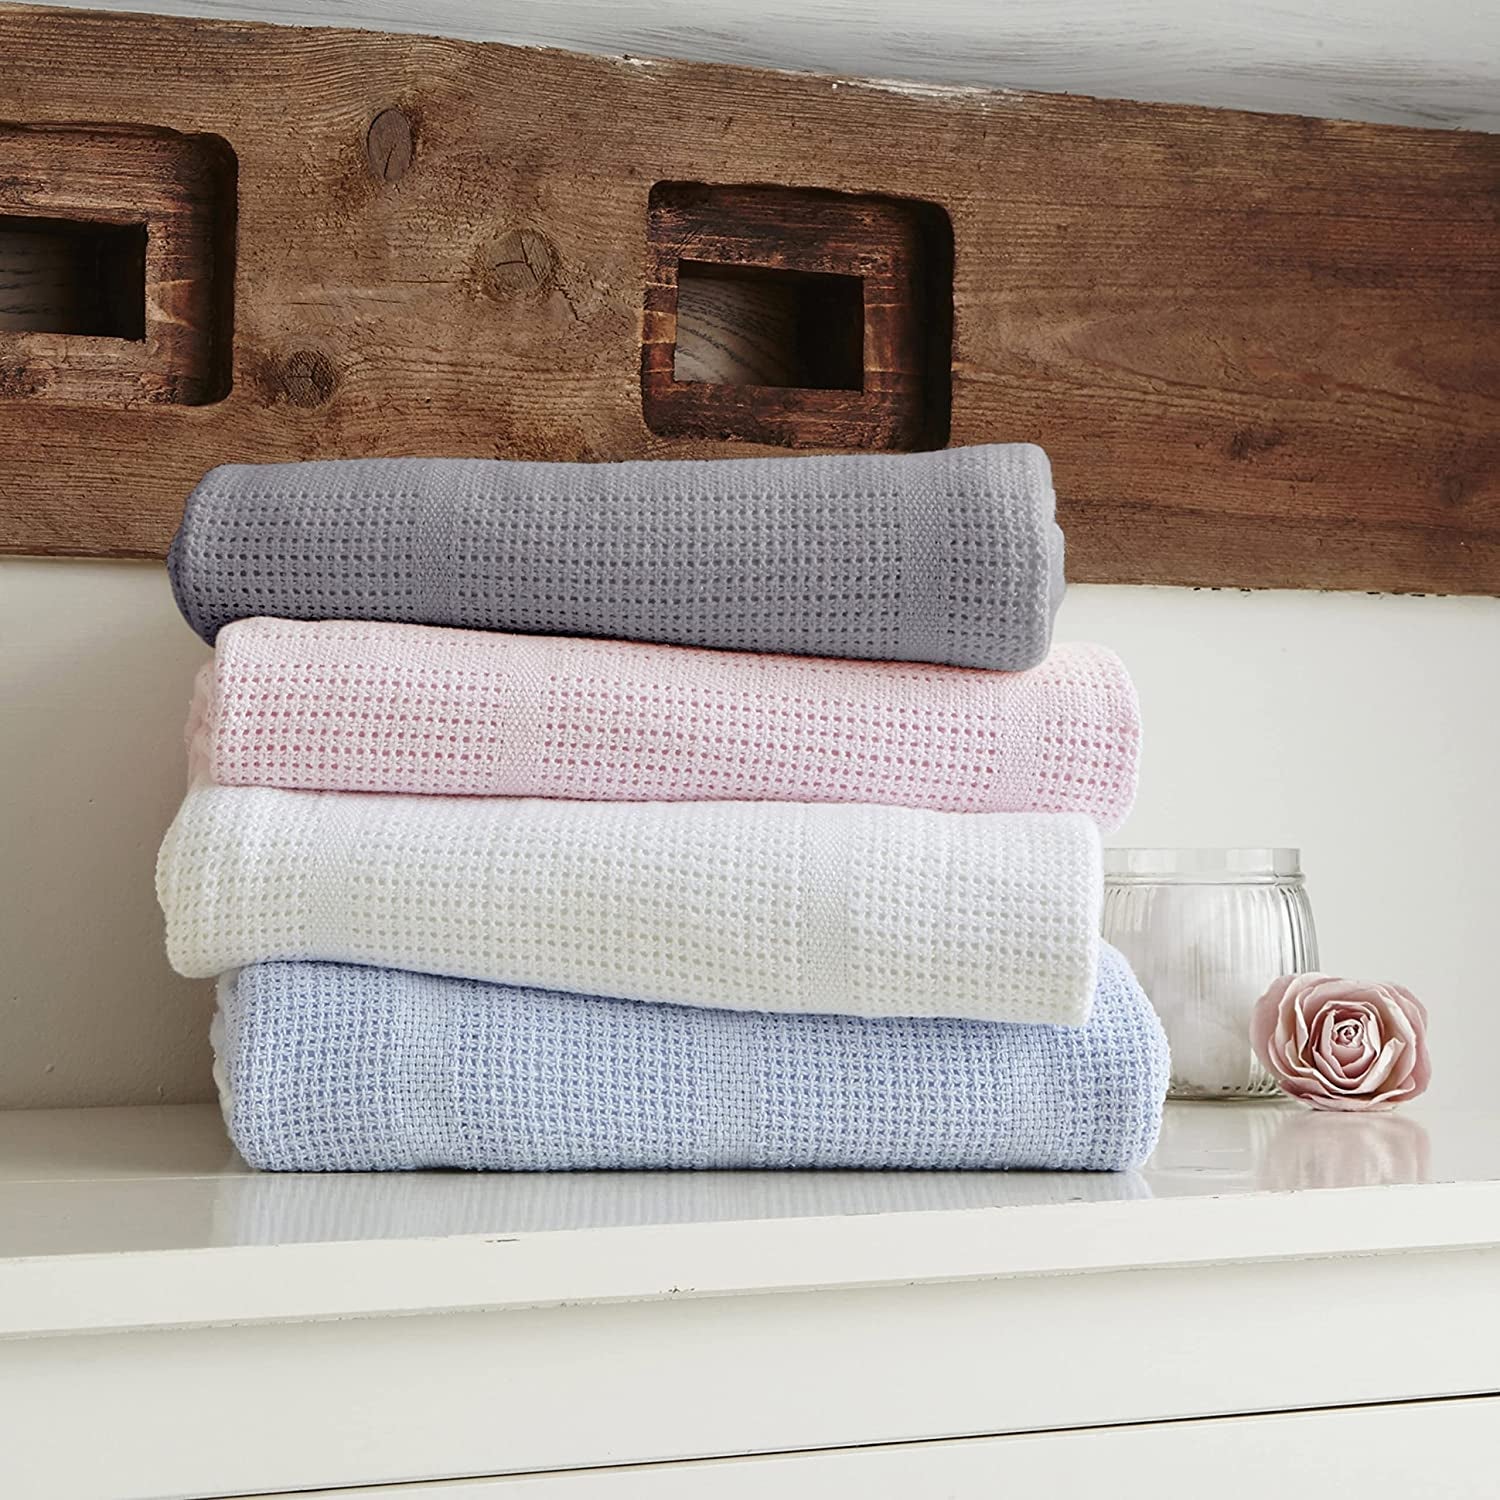 Clair de Lune Cellular Baby Blanket 100% Soft Breathable Cotton, Cot/Cot Bed (100 x 150 cm) Grey